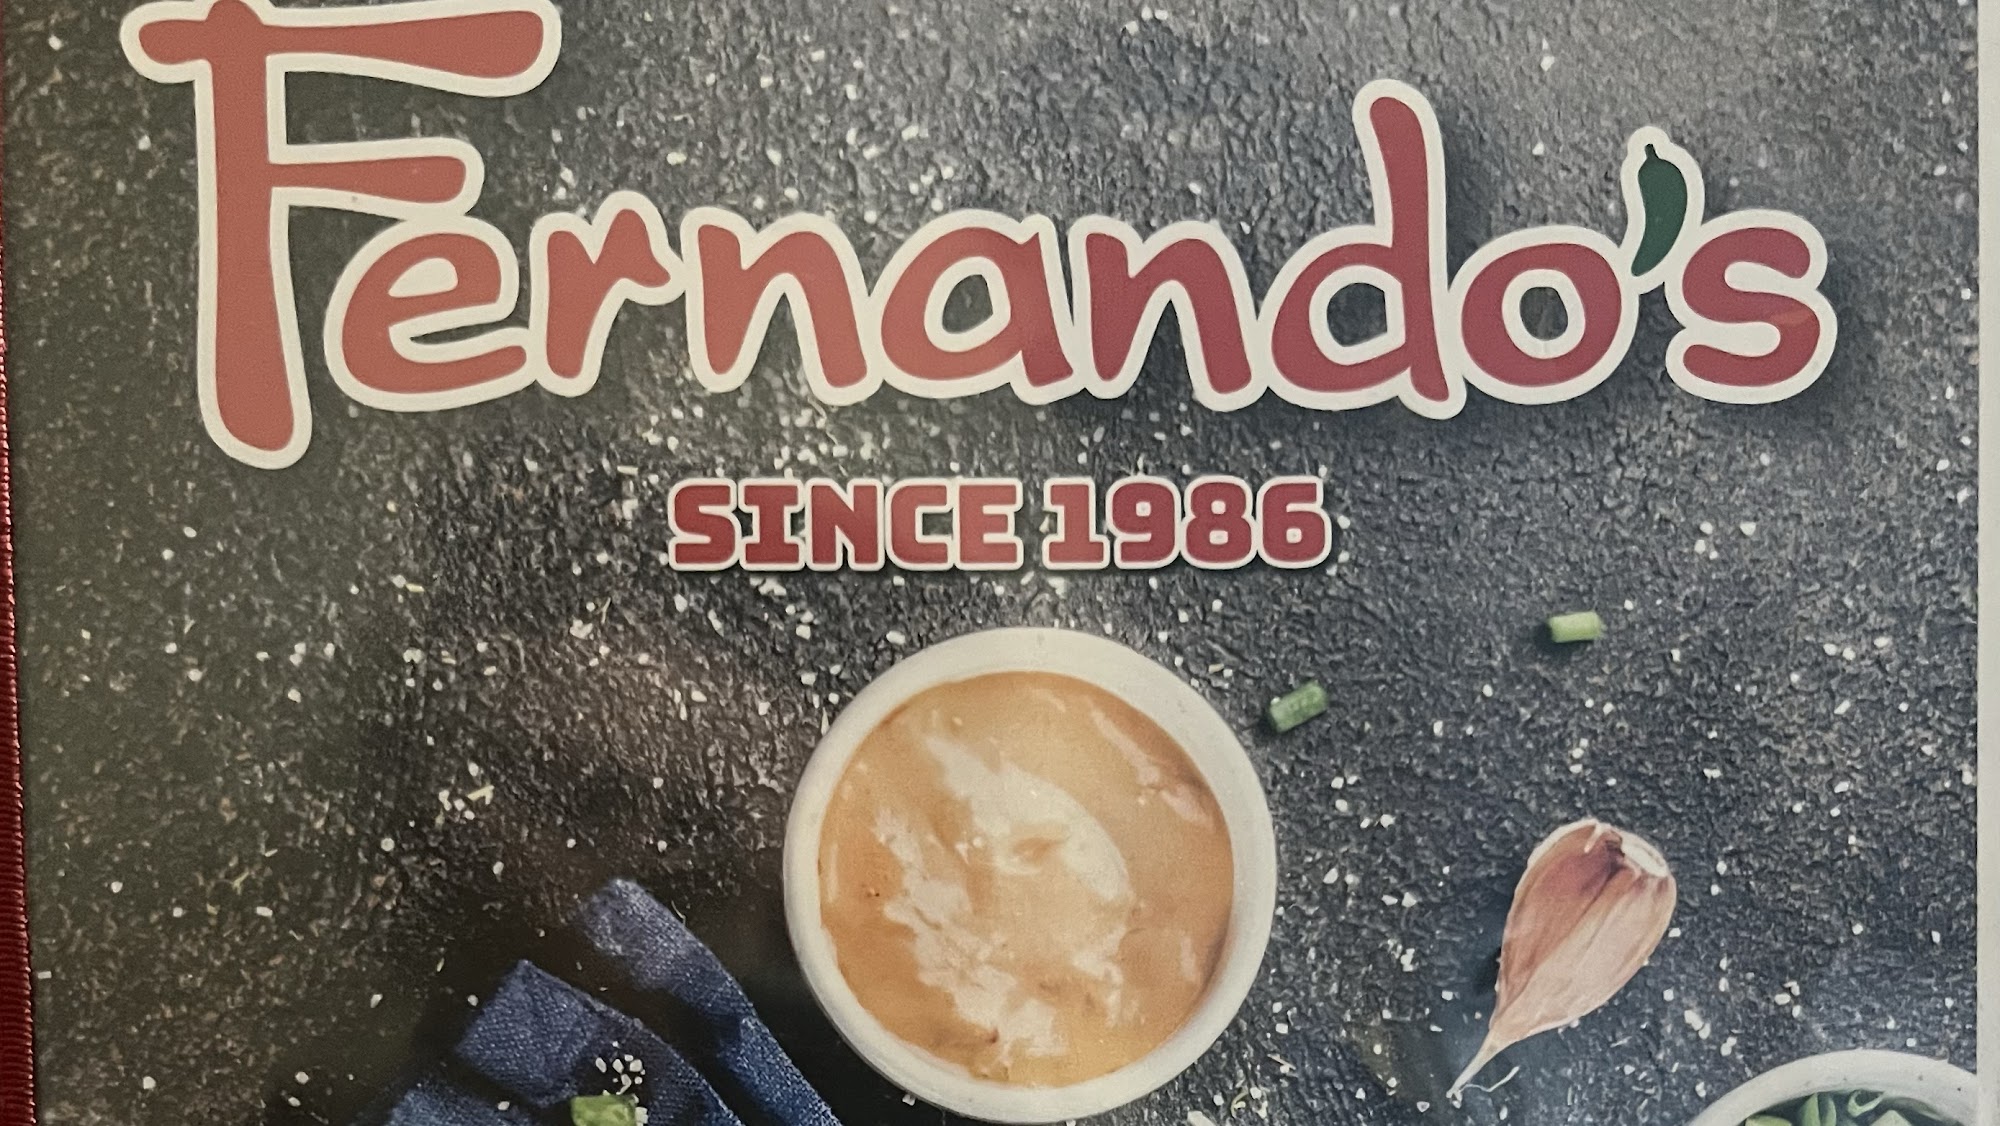 Fernando’s Mexican Grill